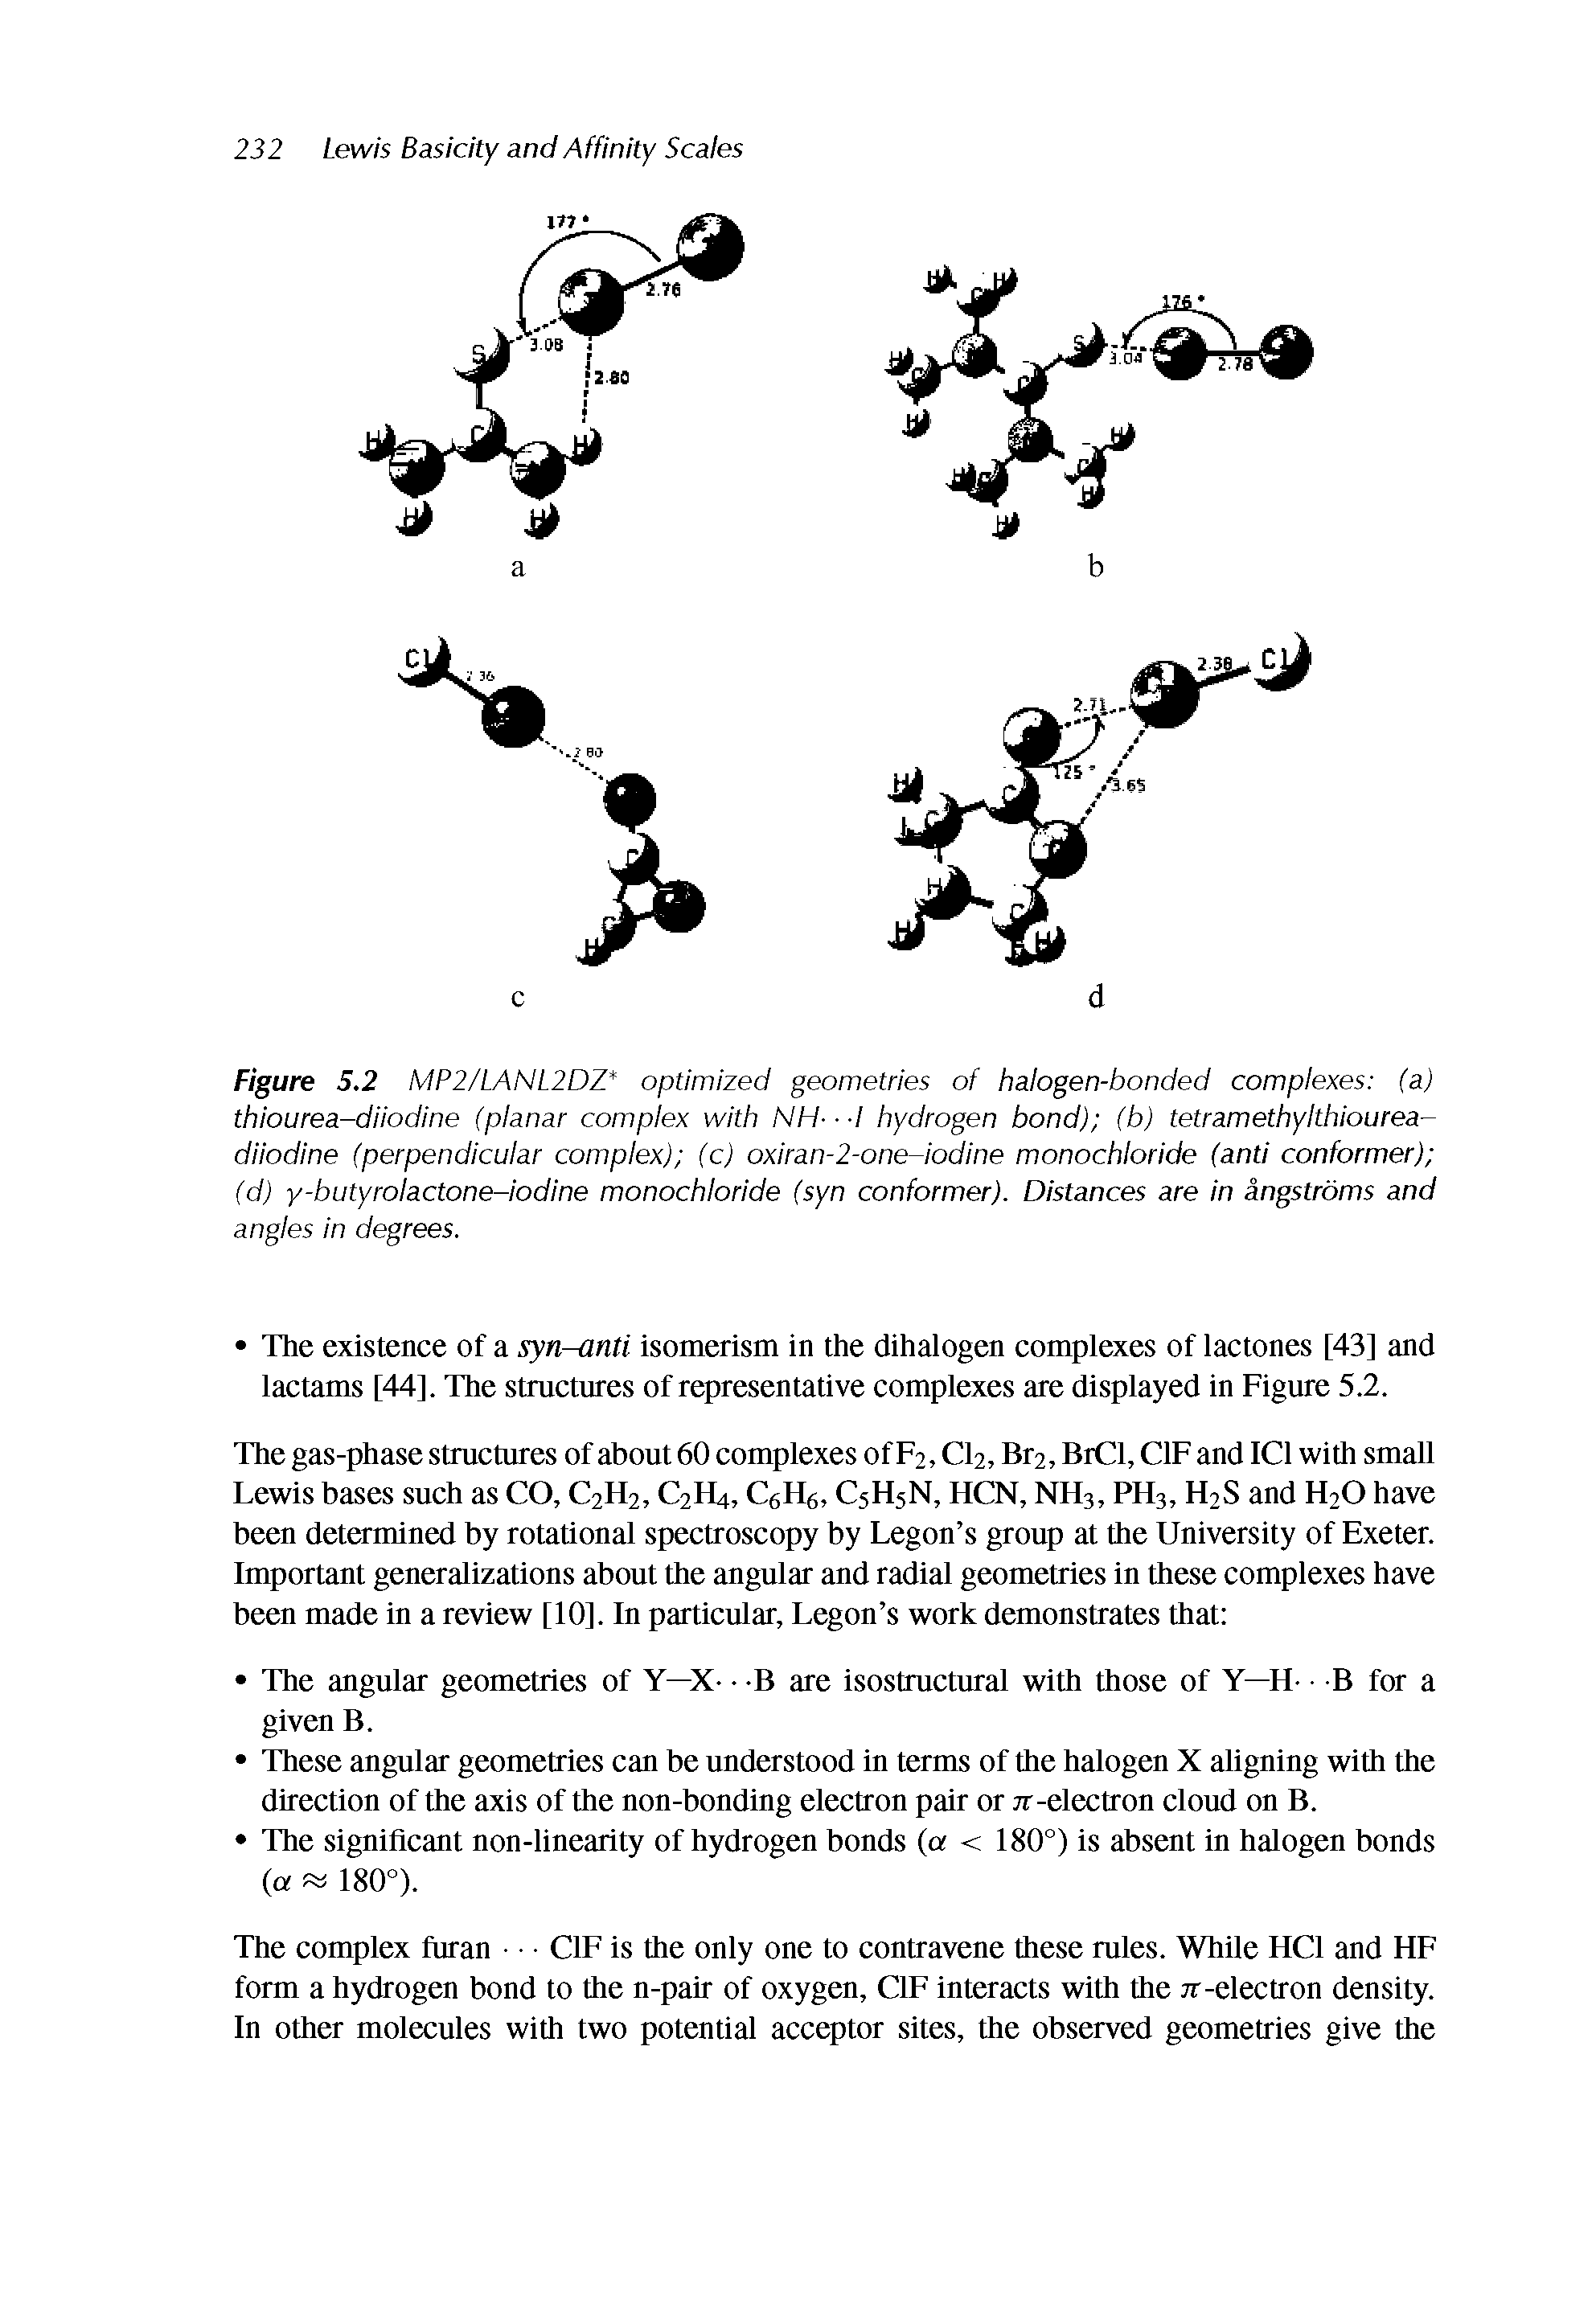 Figure 5,2 MP2/LANL2DZ optimized geometnes of halogen-bonded complexes (a) thIourea-diiodine (planar complex with NH---I hydrogen bond) (b) tetramethylthiourea-diiodine (perpendicular complex) (c) oxlran-2-one-lodlne monochloride (anti conformer) (d) y-butyrolactone-iodine monochloride (syn conformer). Distances are in angstroms and...